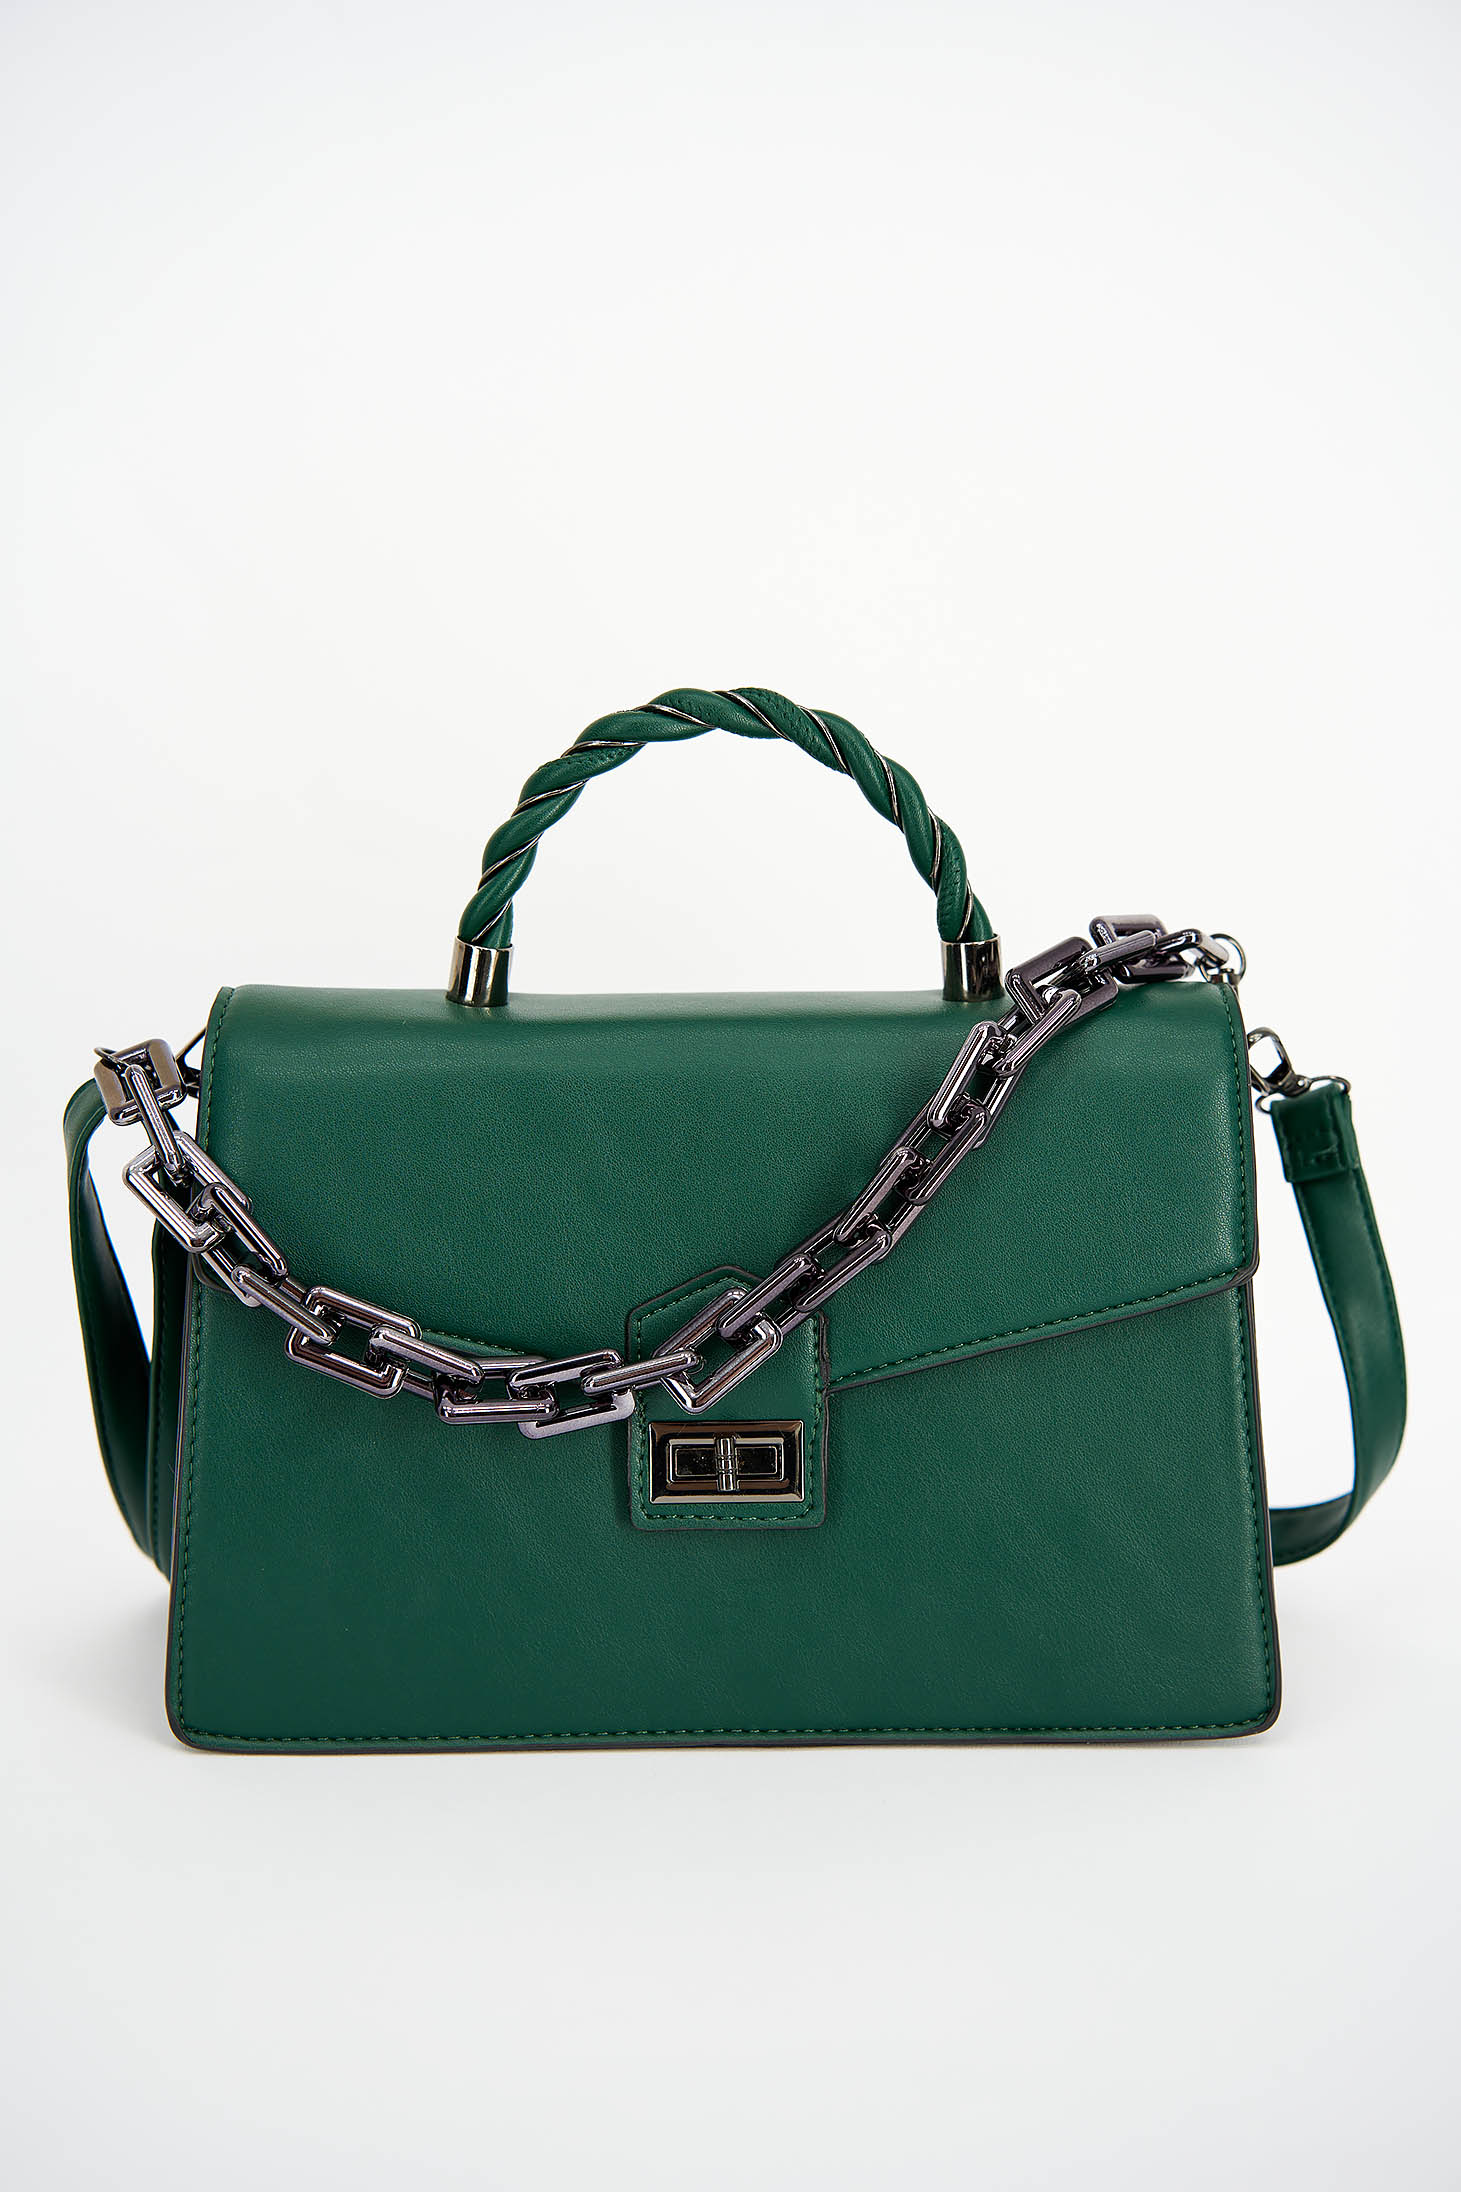 Darkgreen bag from ecological leather short handles